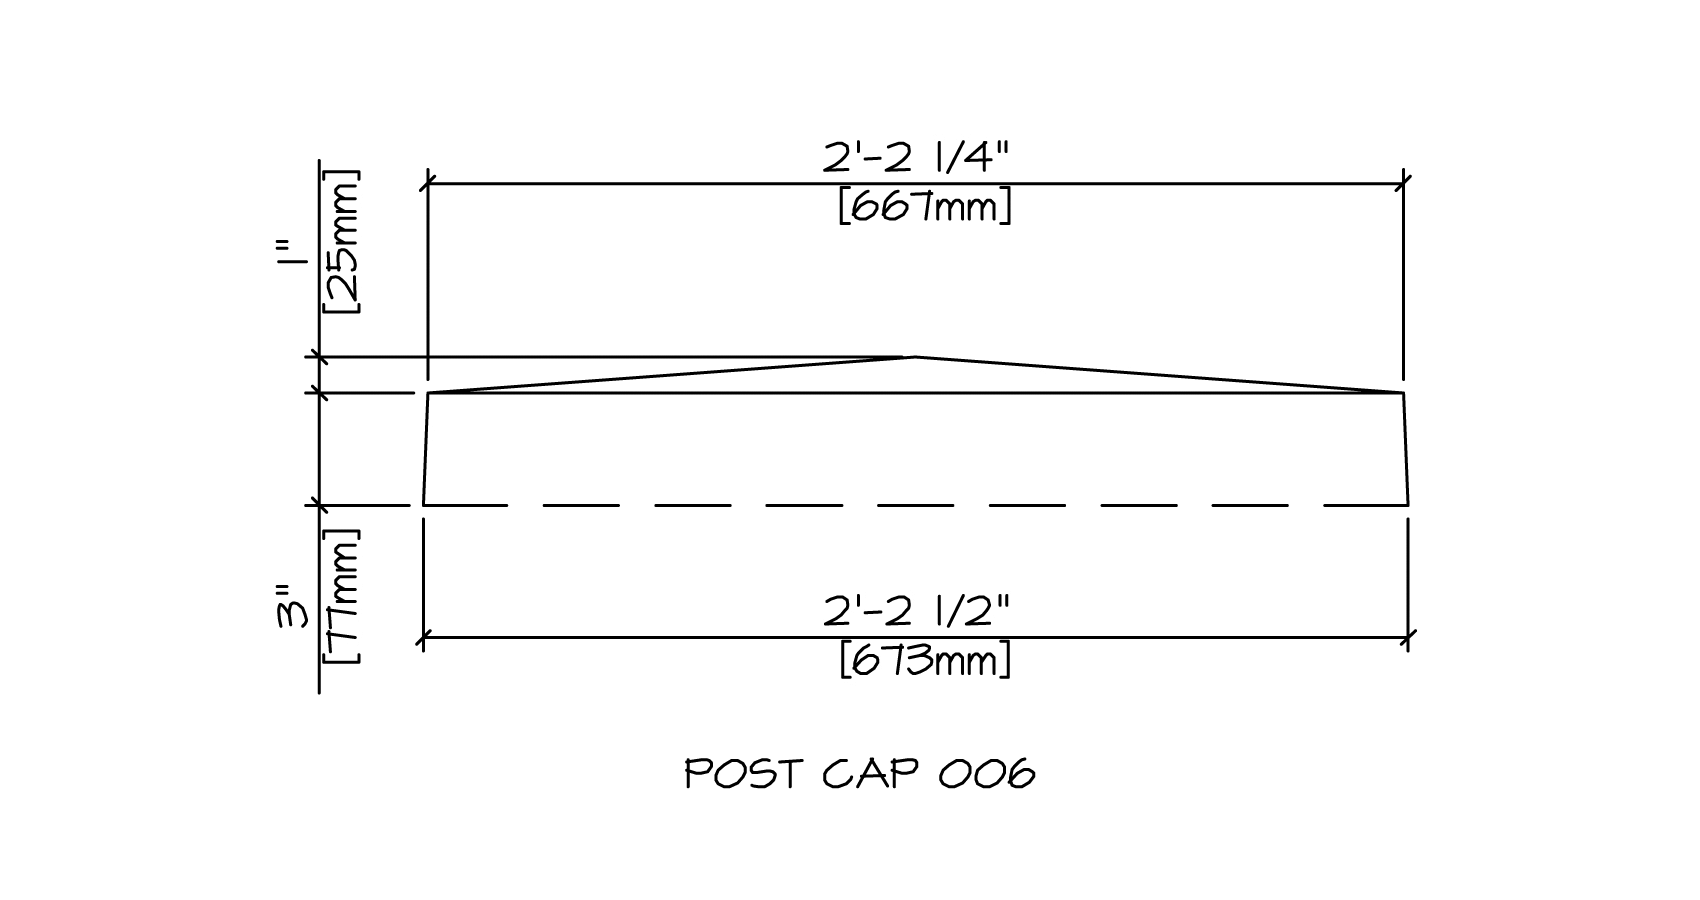 Custom Post Caps #006 - Tristar